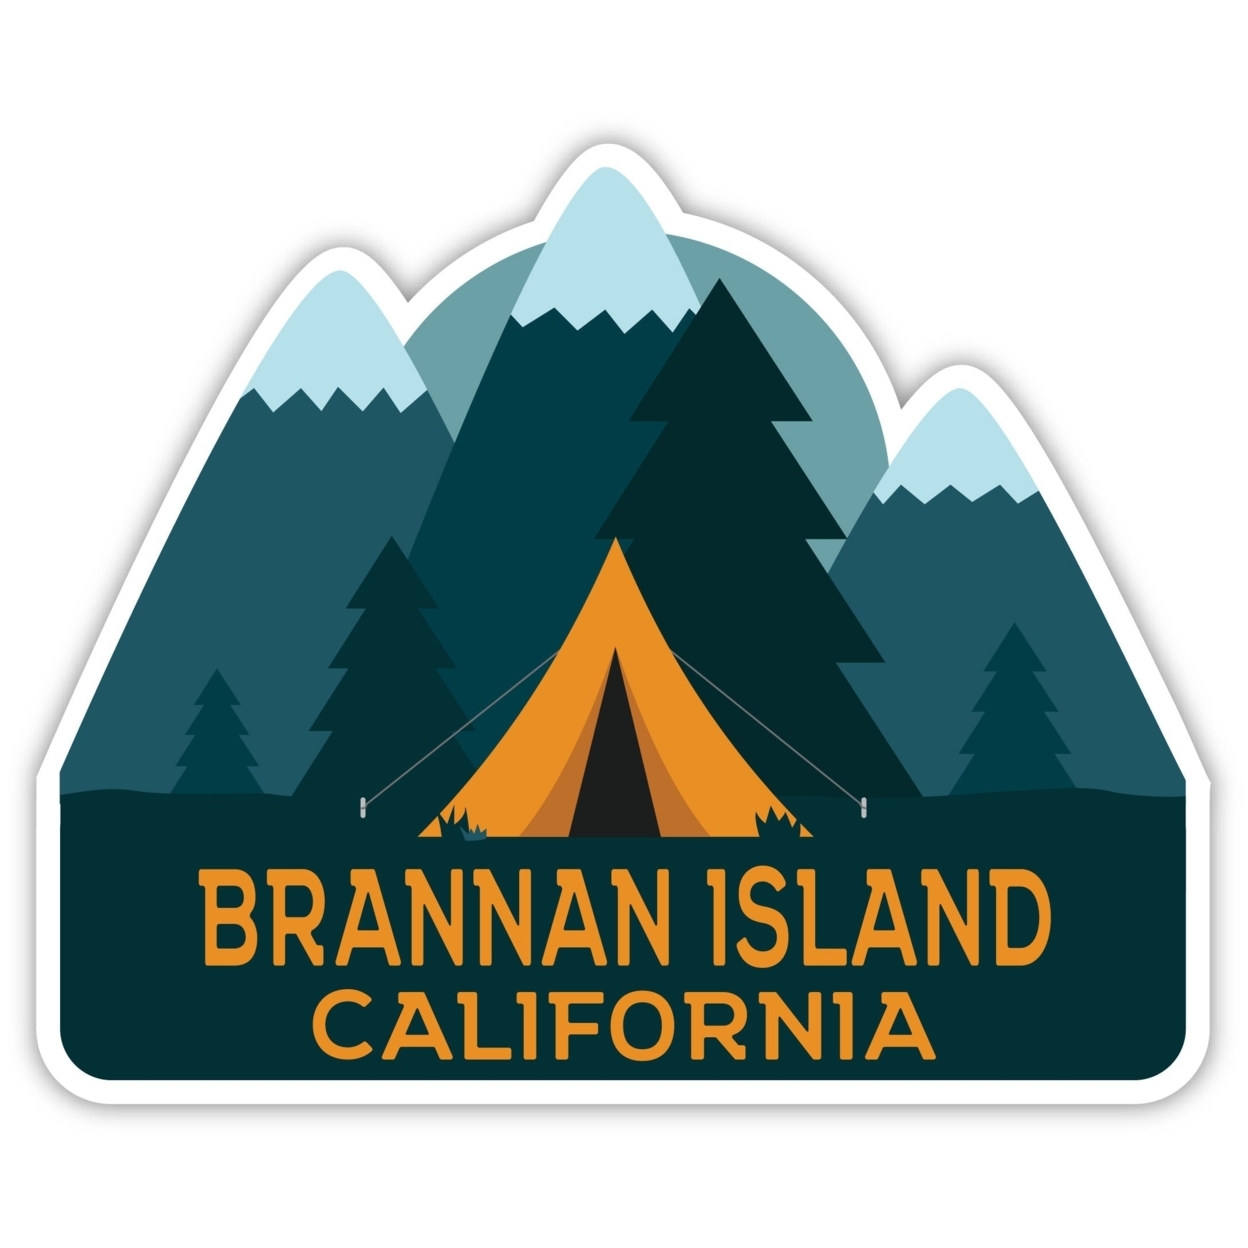 Brannan Island California Souvenir Decorative Stickers (Choose Theme And Size) - 4-Pack, 10-Inch, Adventures Awaits